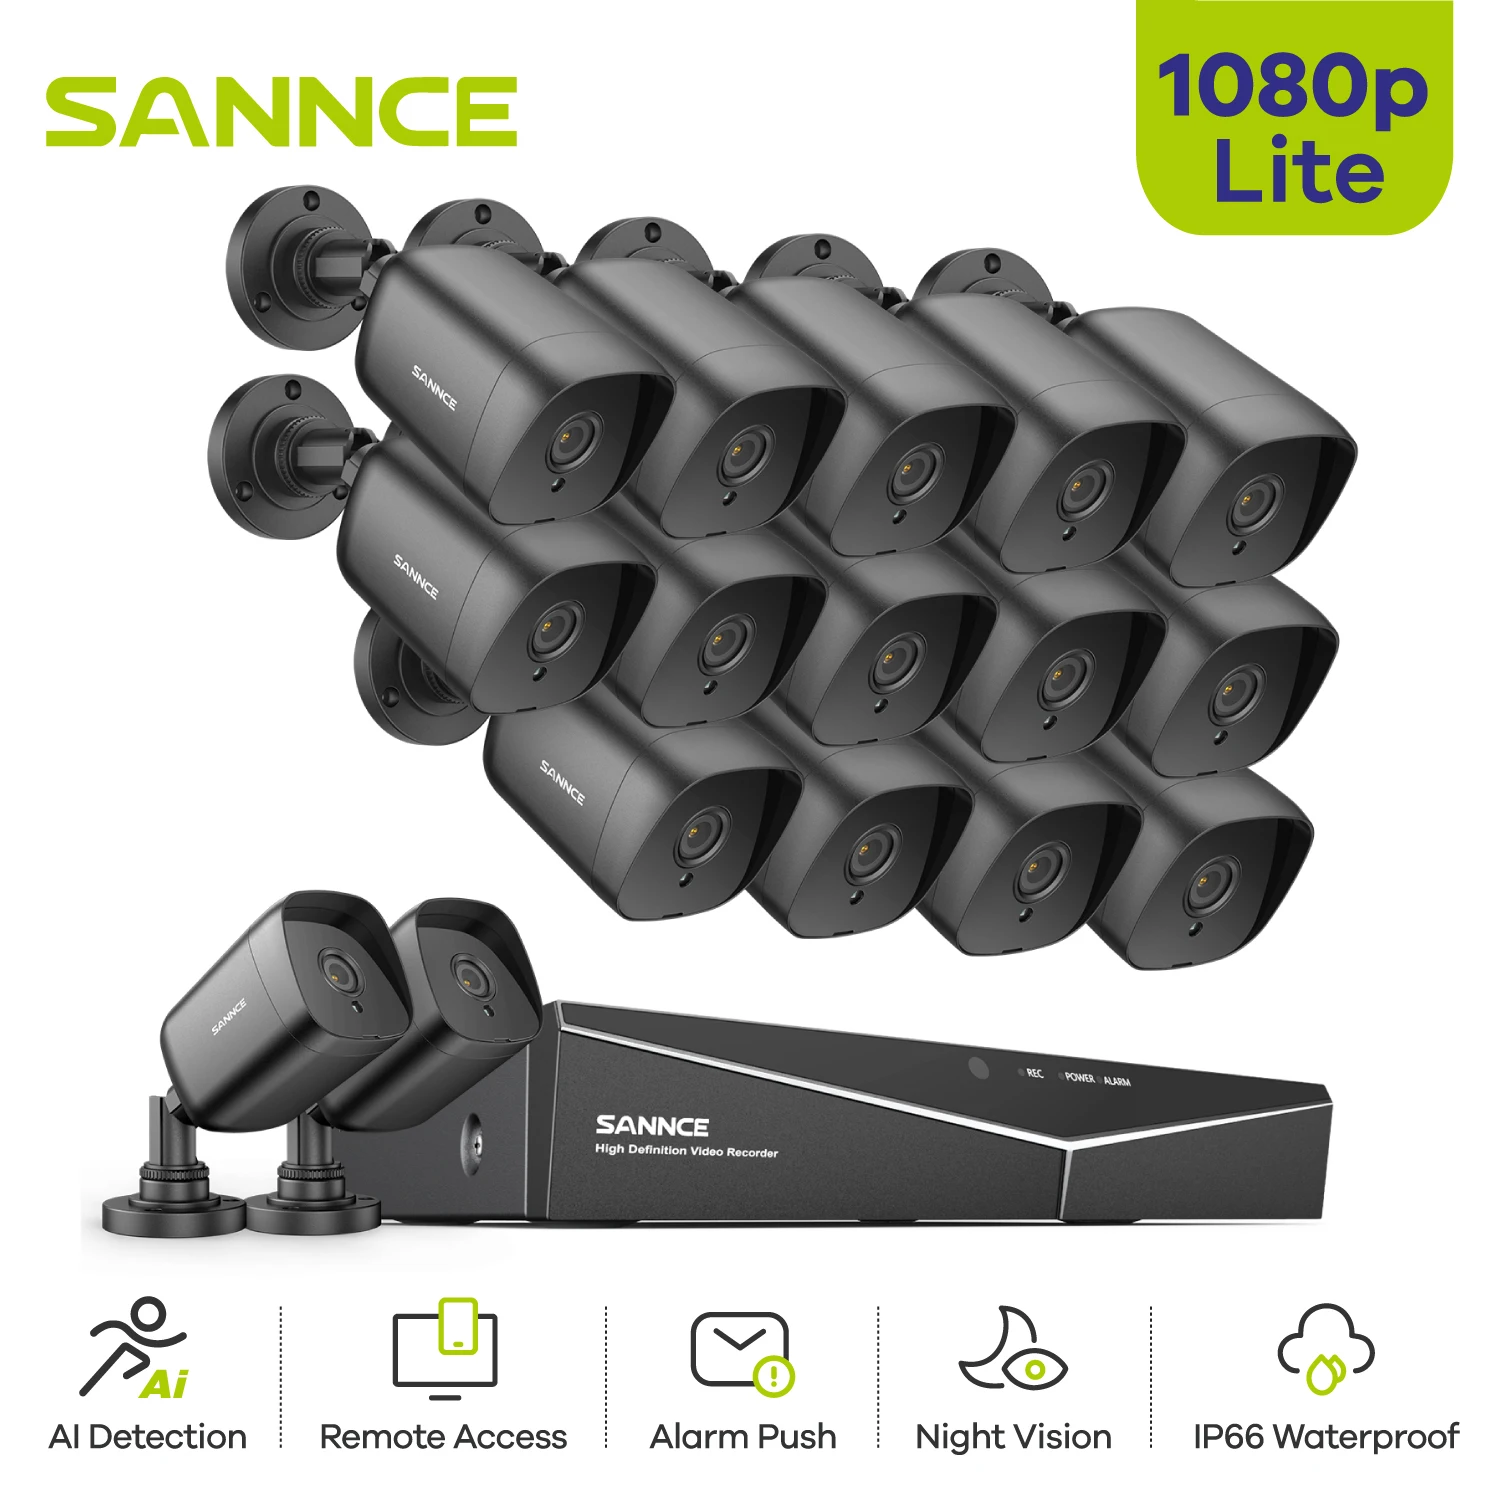 Sannce Video Surveillance System | Kit Video Surveillance Sannce - 16ch 1080p  Lite - Aliexpress